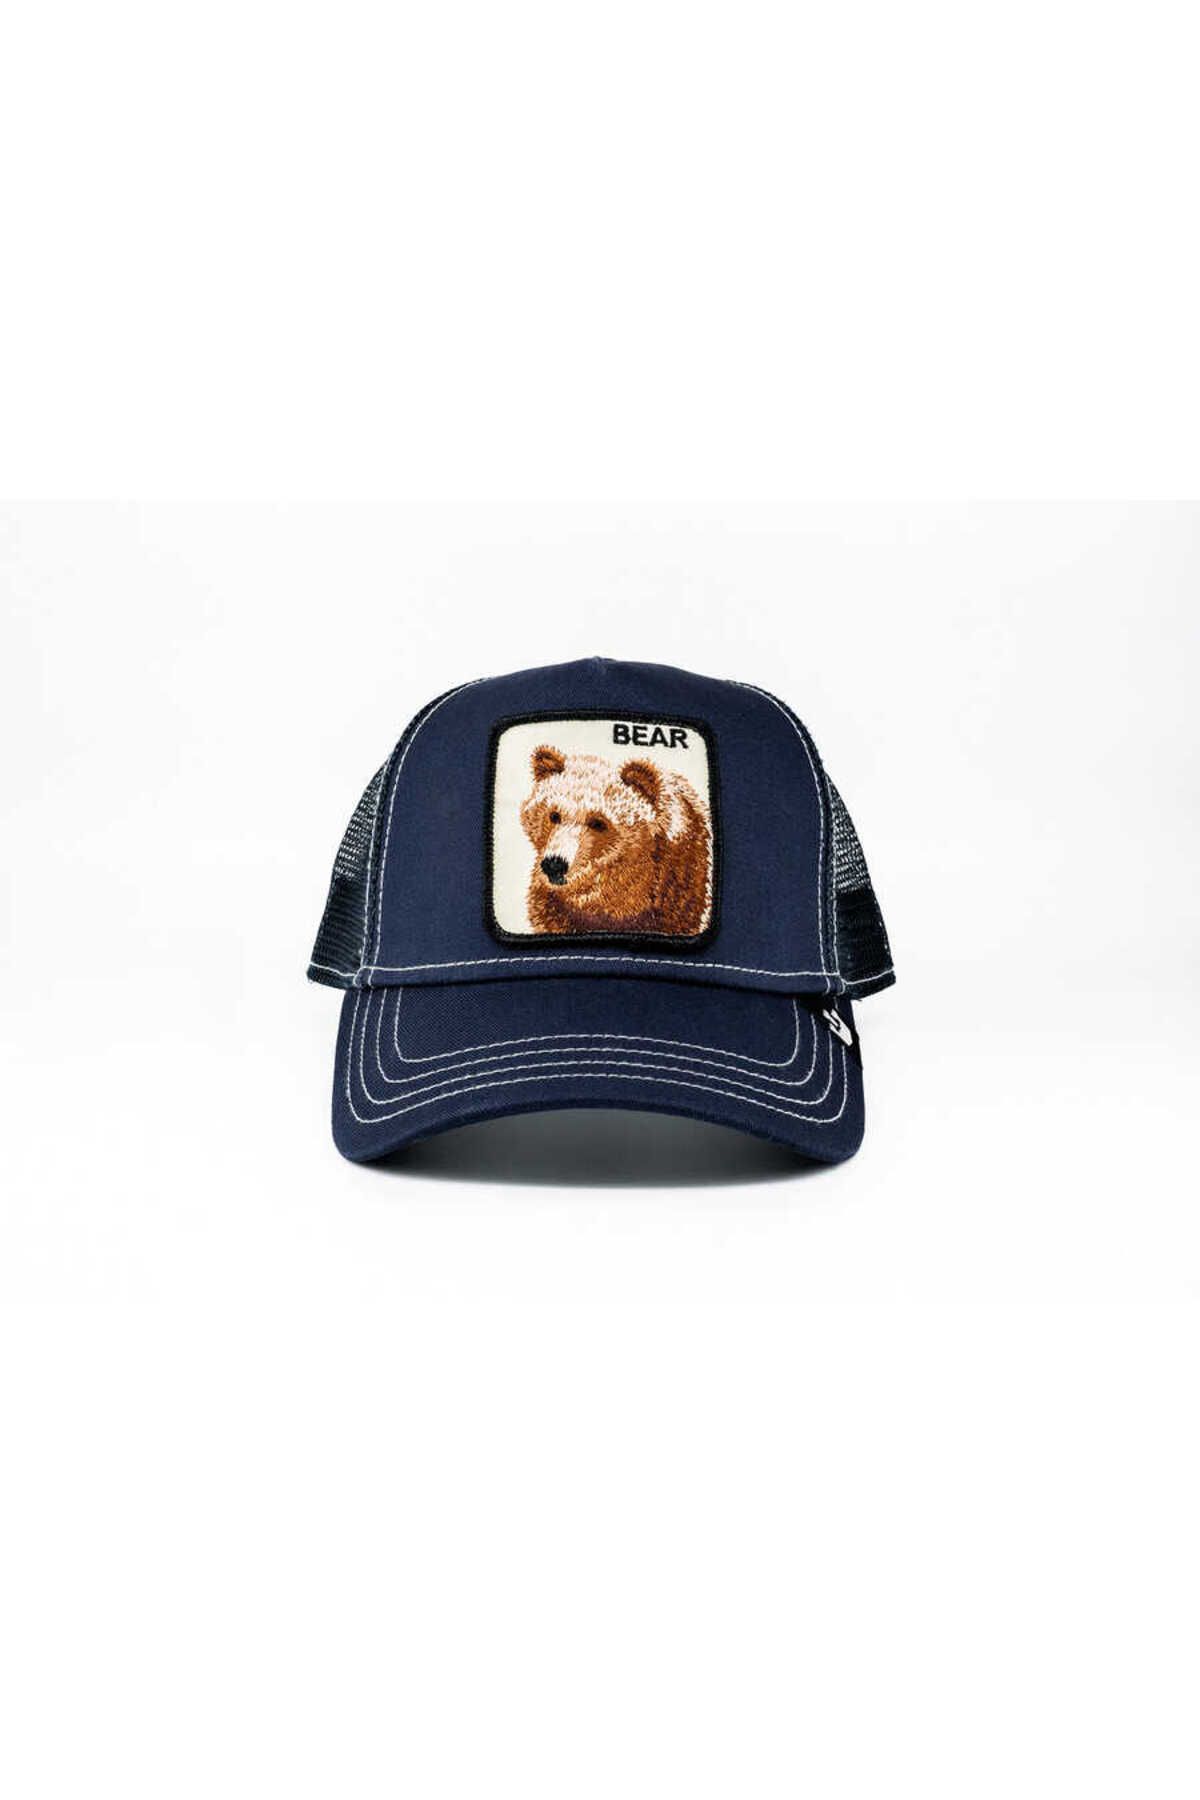 Goorin Bros خرس آبی (شکل خرس) کلاه نیروی دریایی